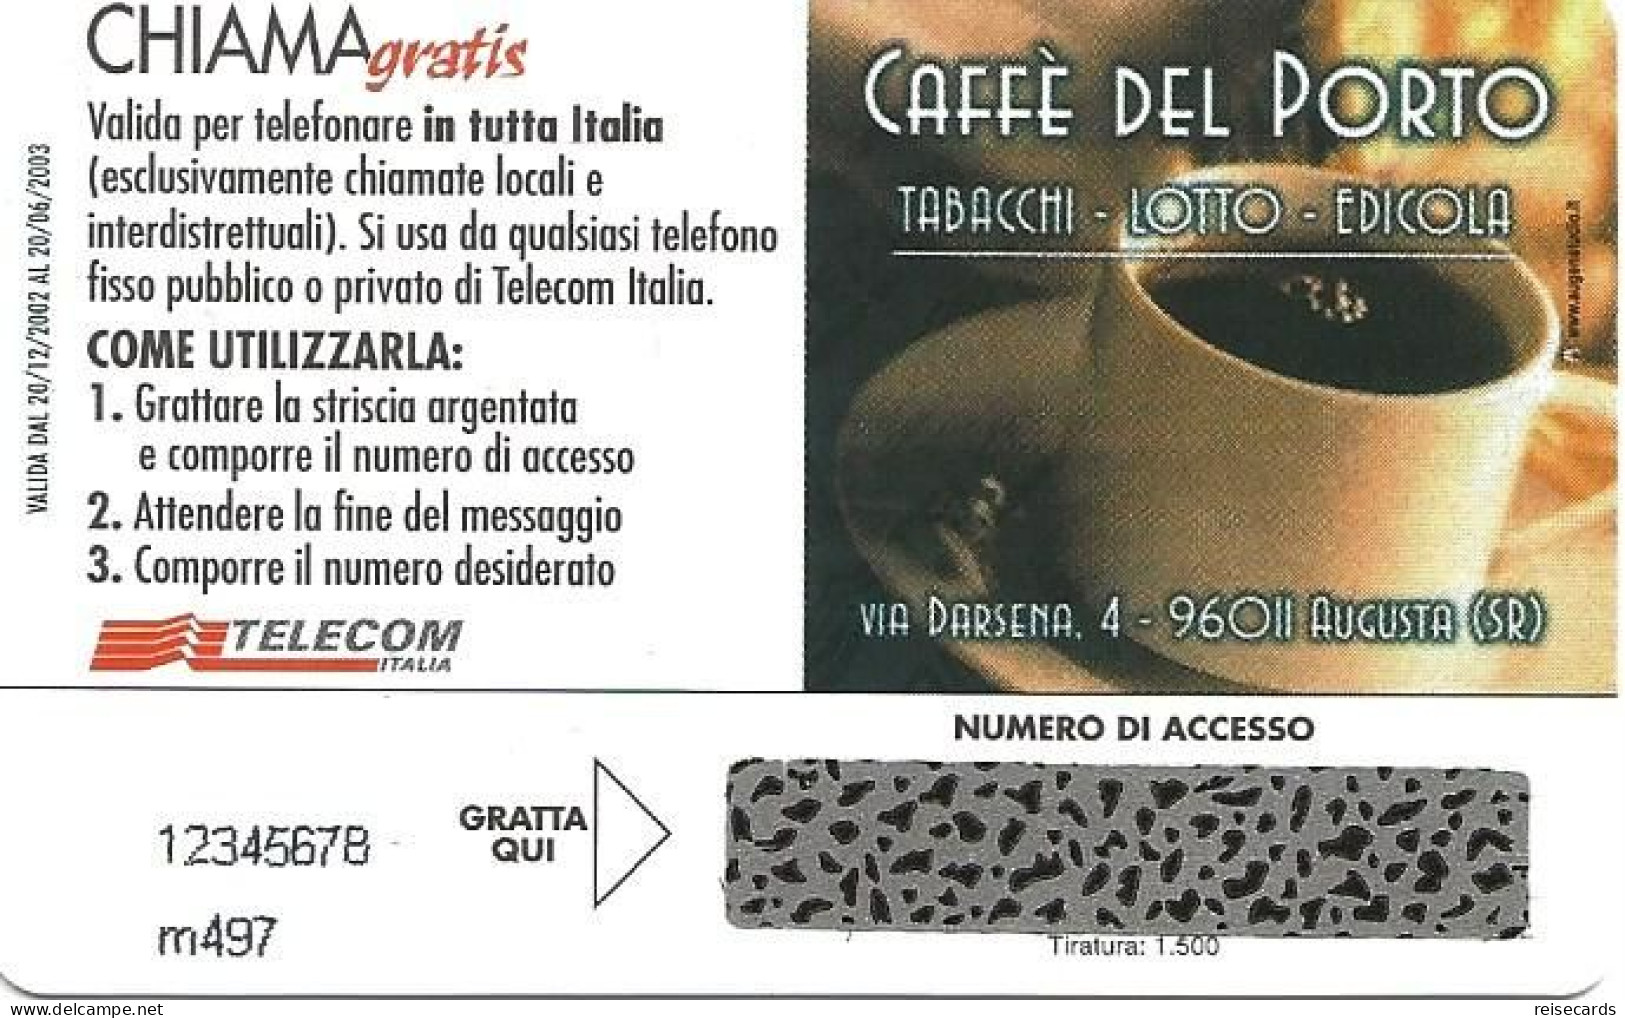 Italy: Telecom Italia Chiama Gratis - Caffé Del Porto. Mint - Publiques Publicitaires